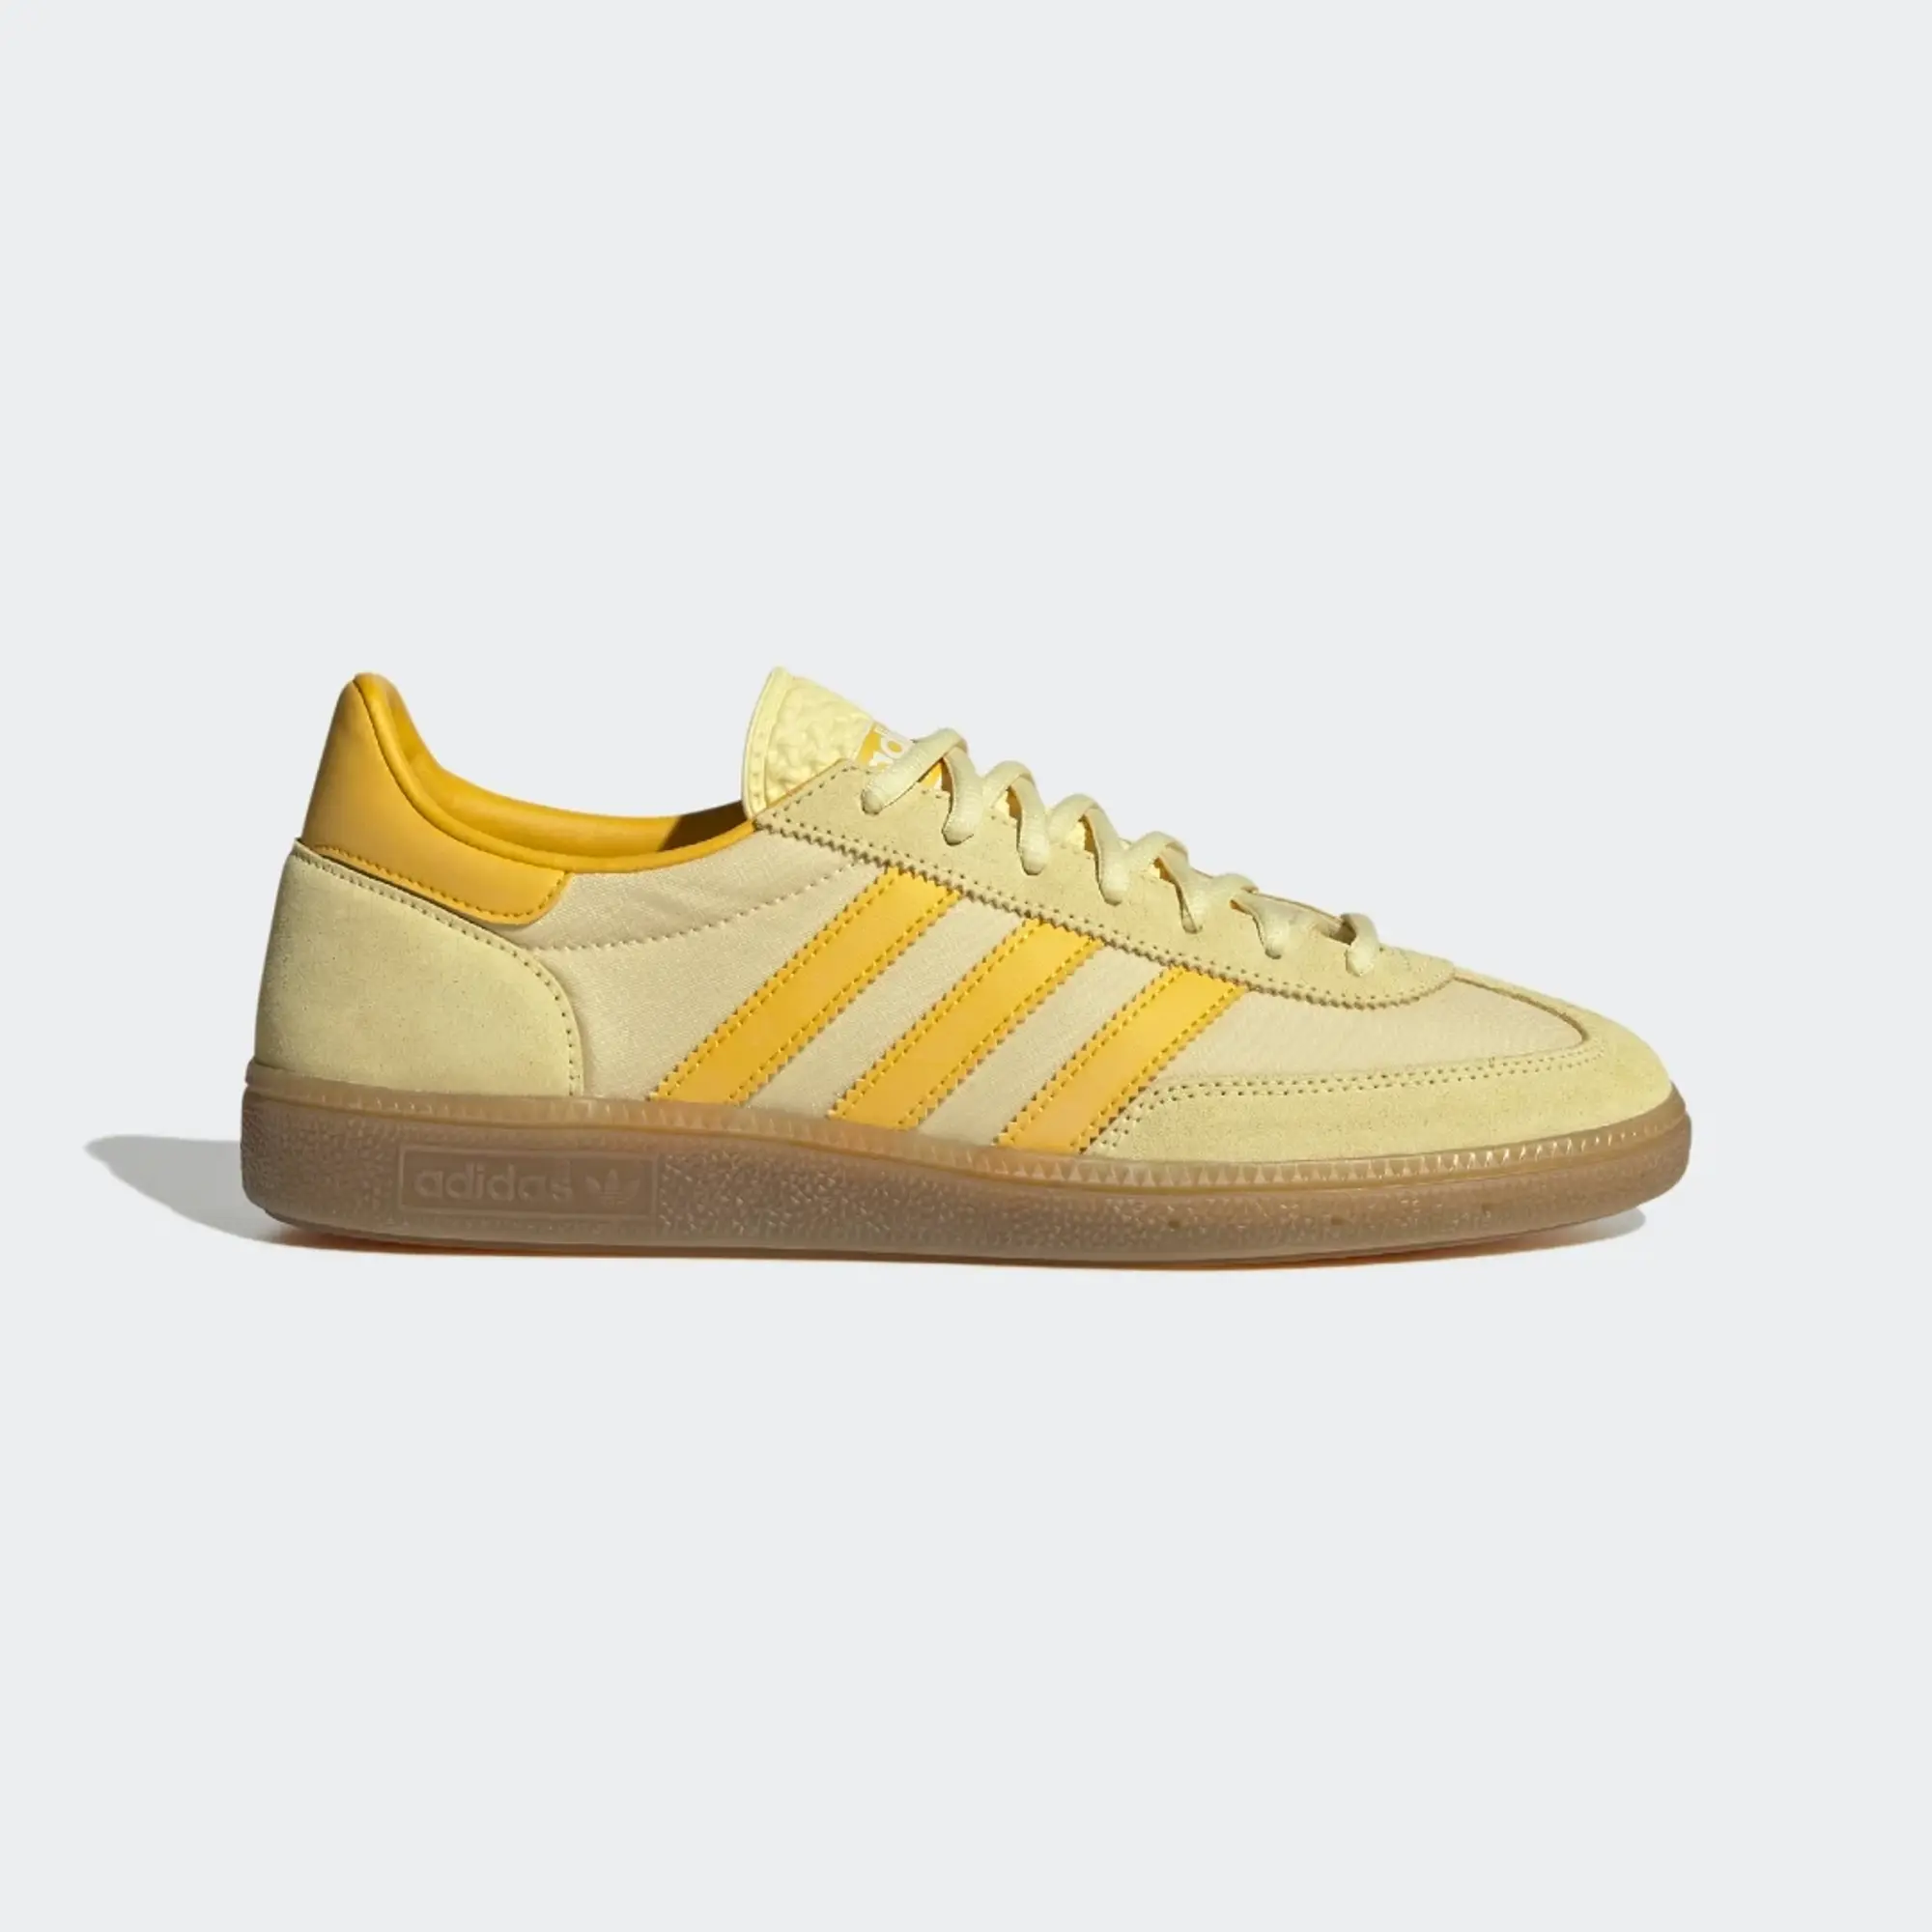 adidas Originals Handball Spezial Trainer - Yellow / Gold / Gum